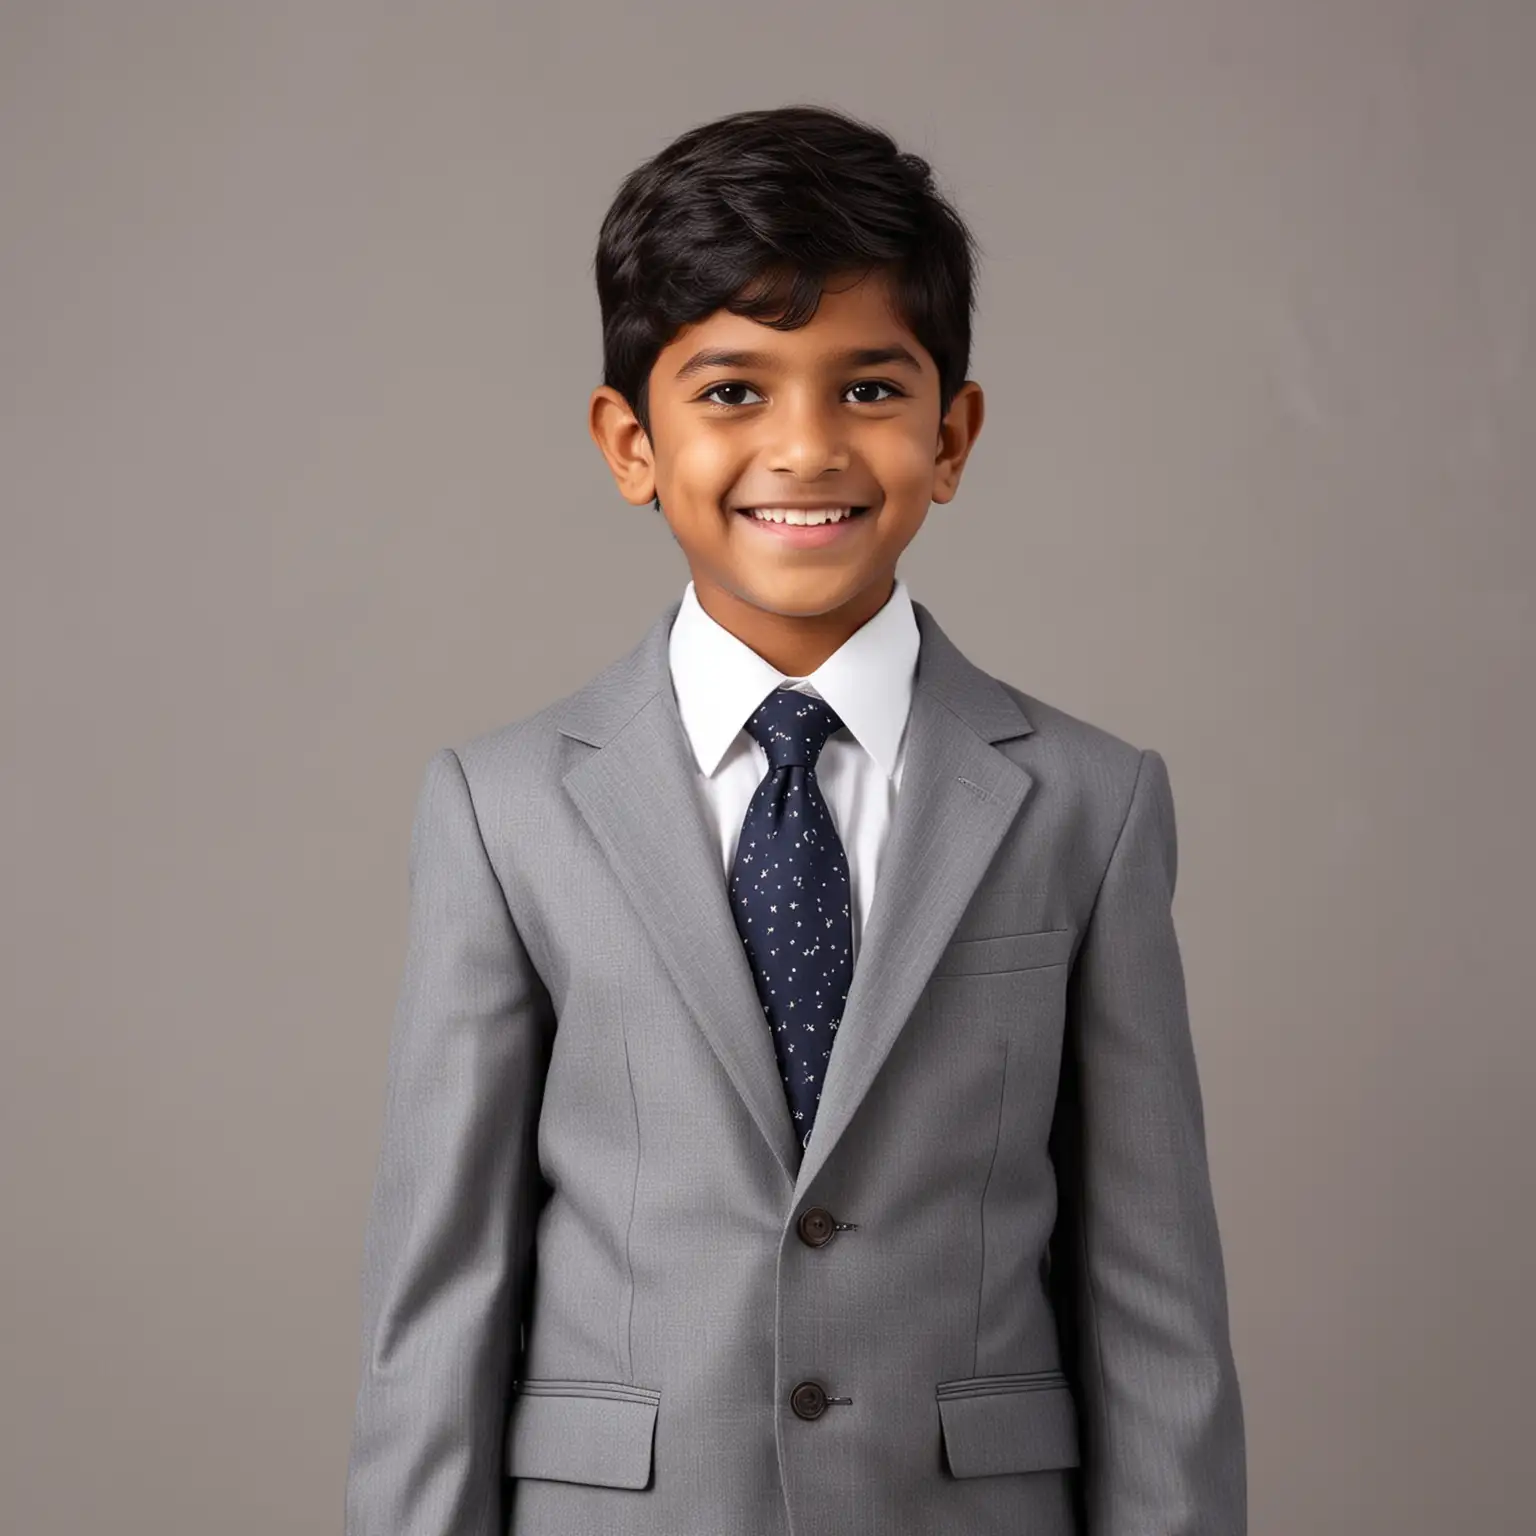 Smiling Indian Boy Dressed as Businessman Embracing Success